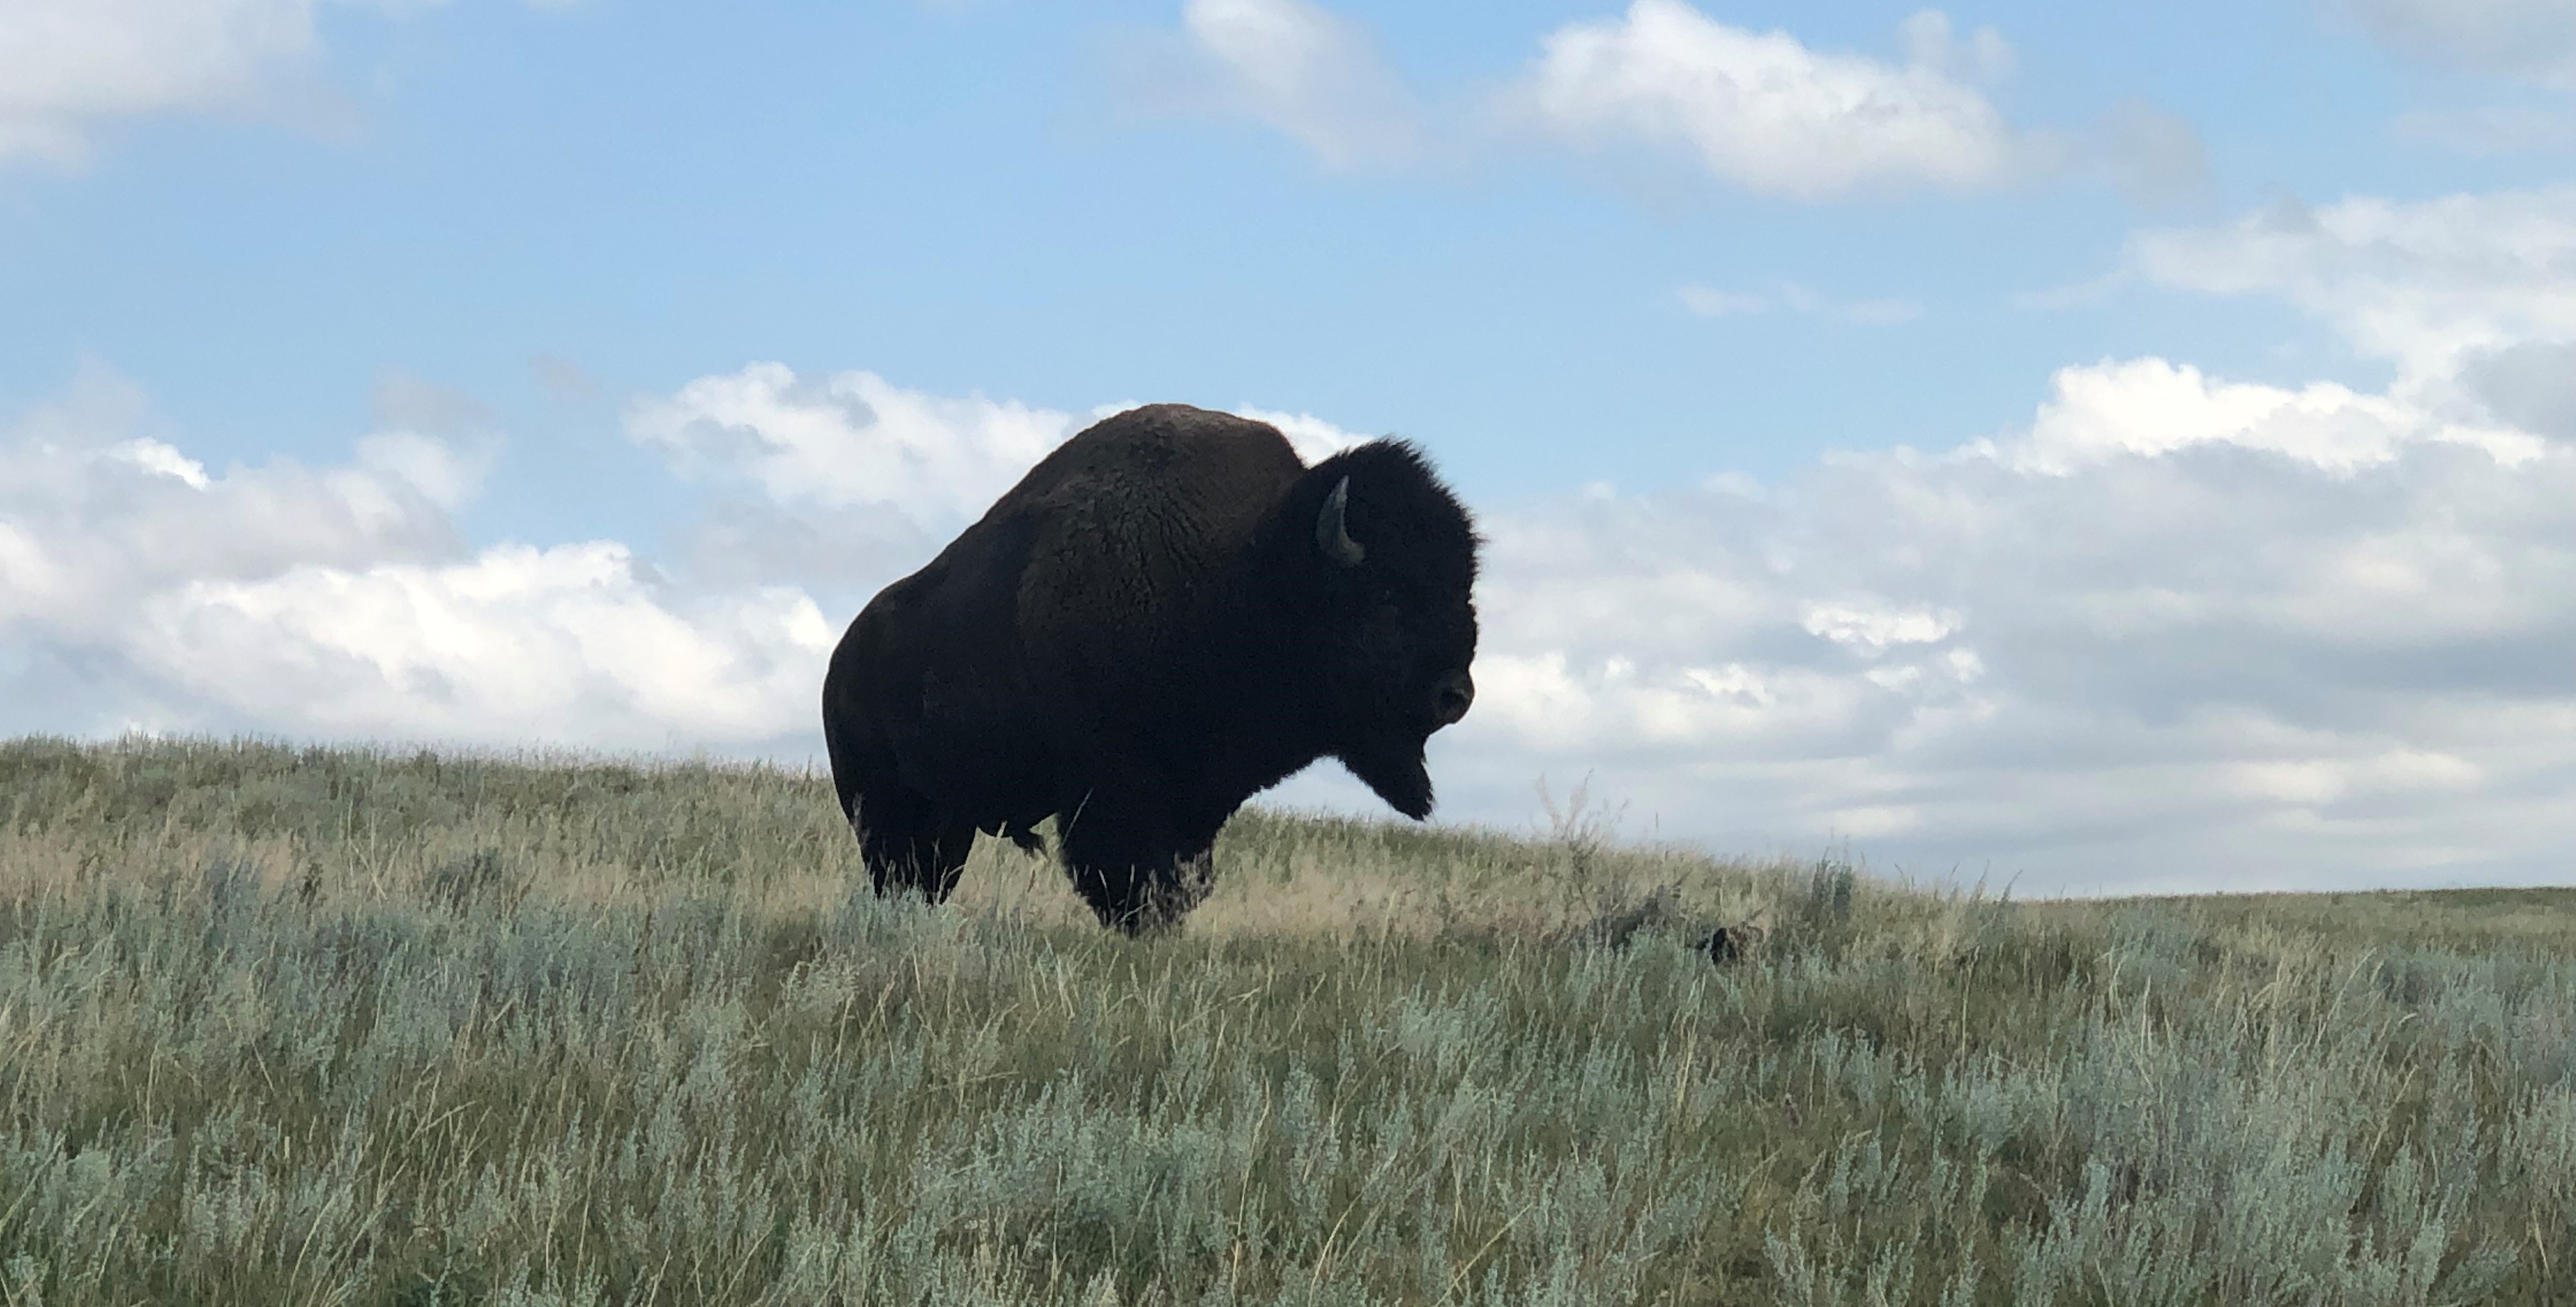 bison bull